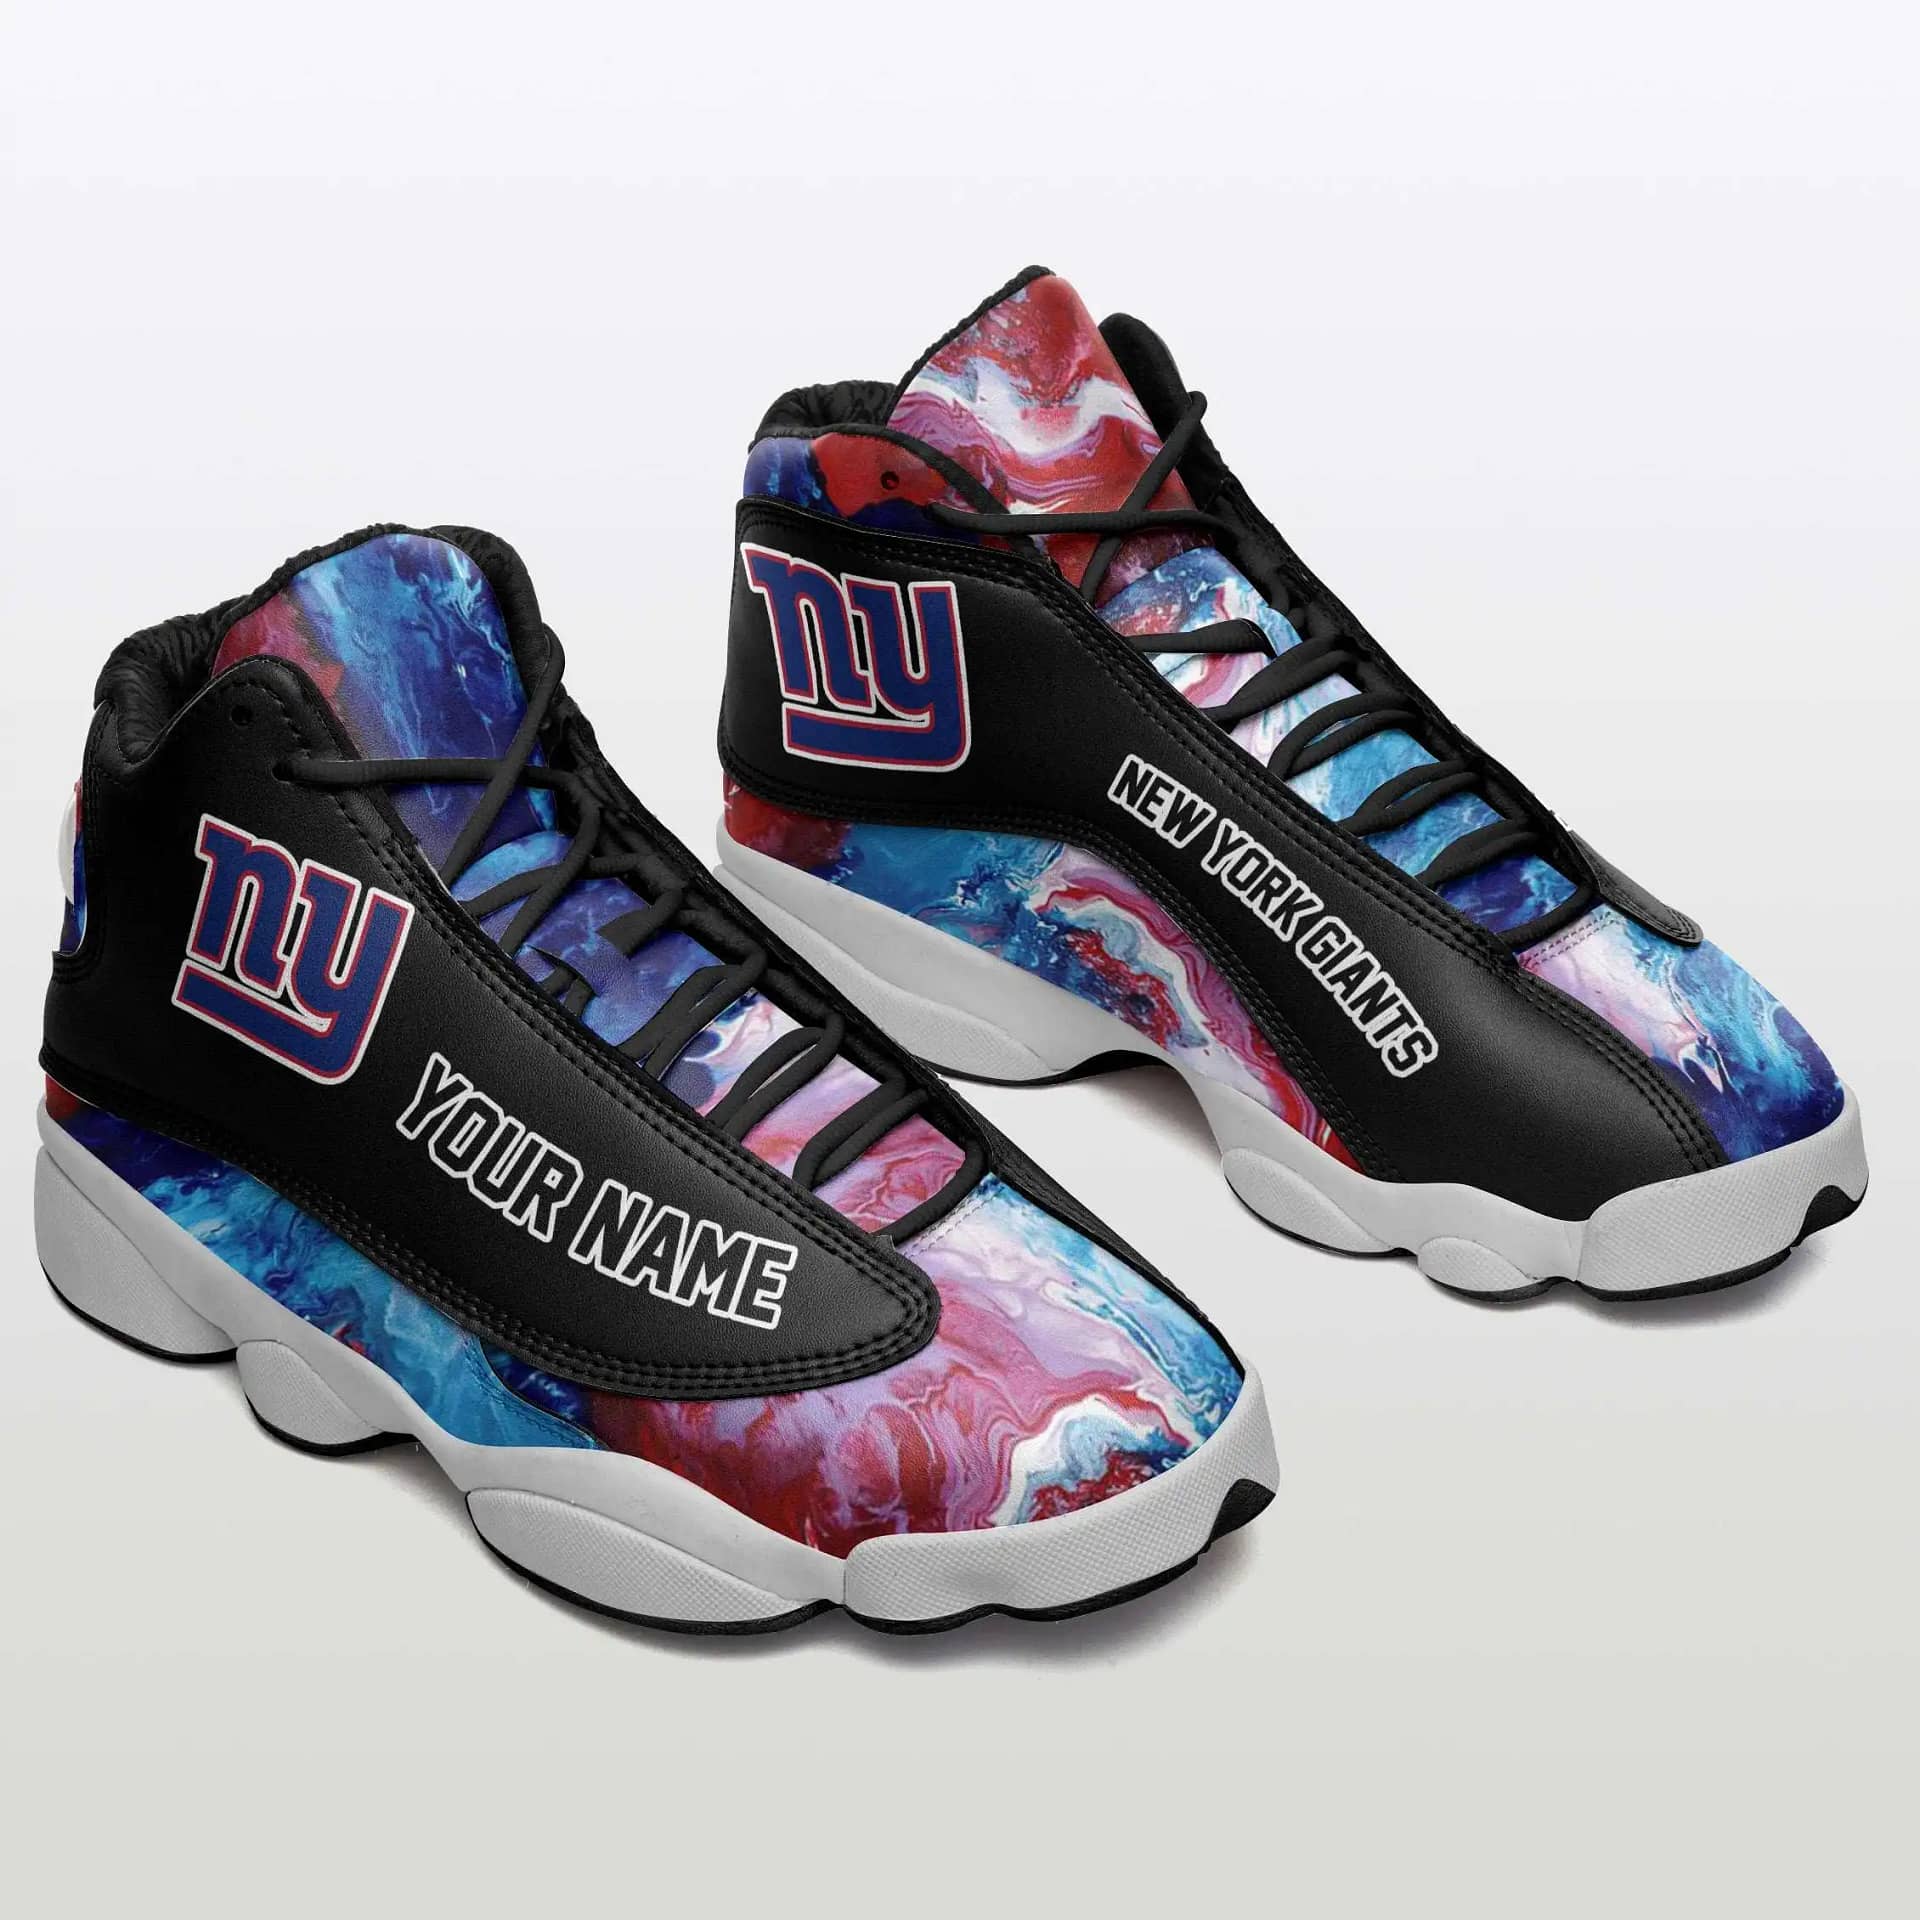 New York Giants Air Jordan Shoes